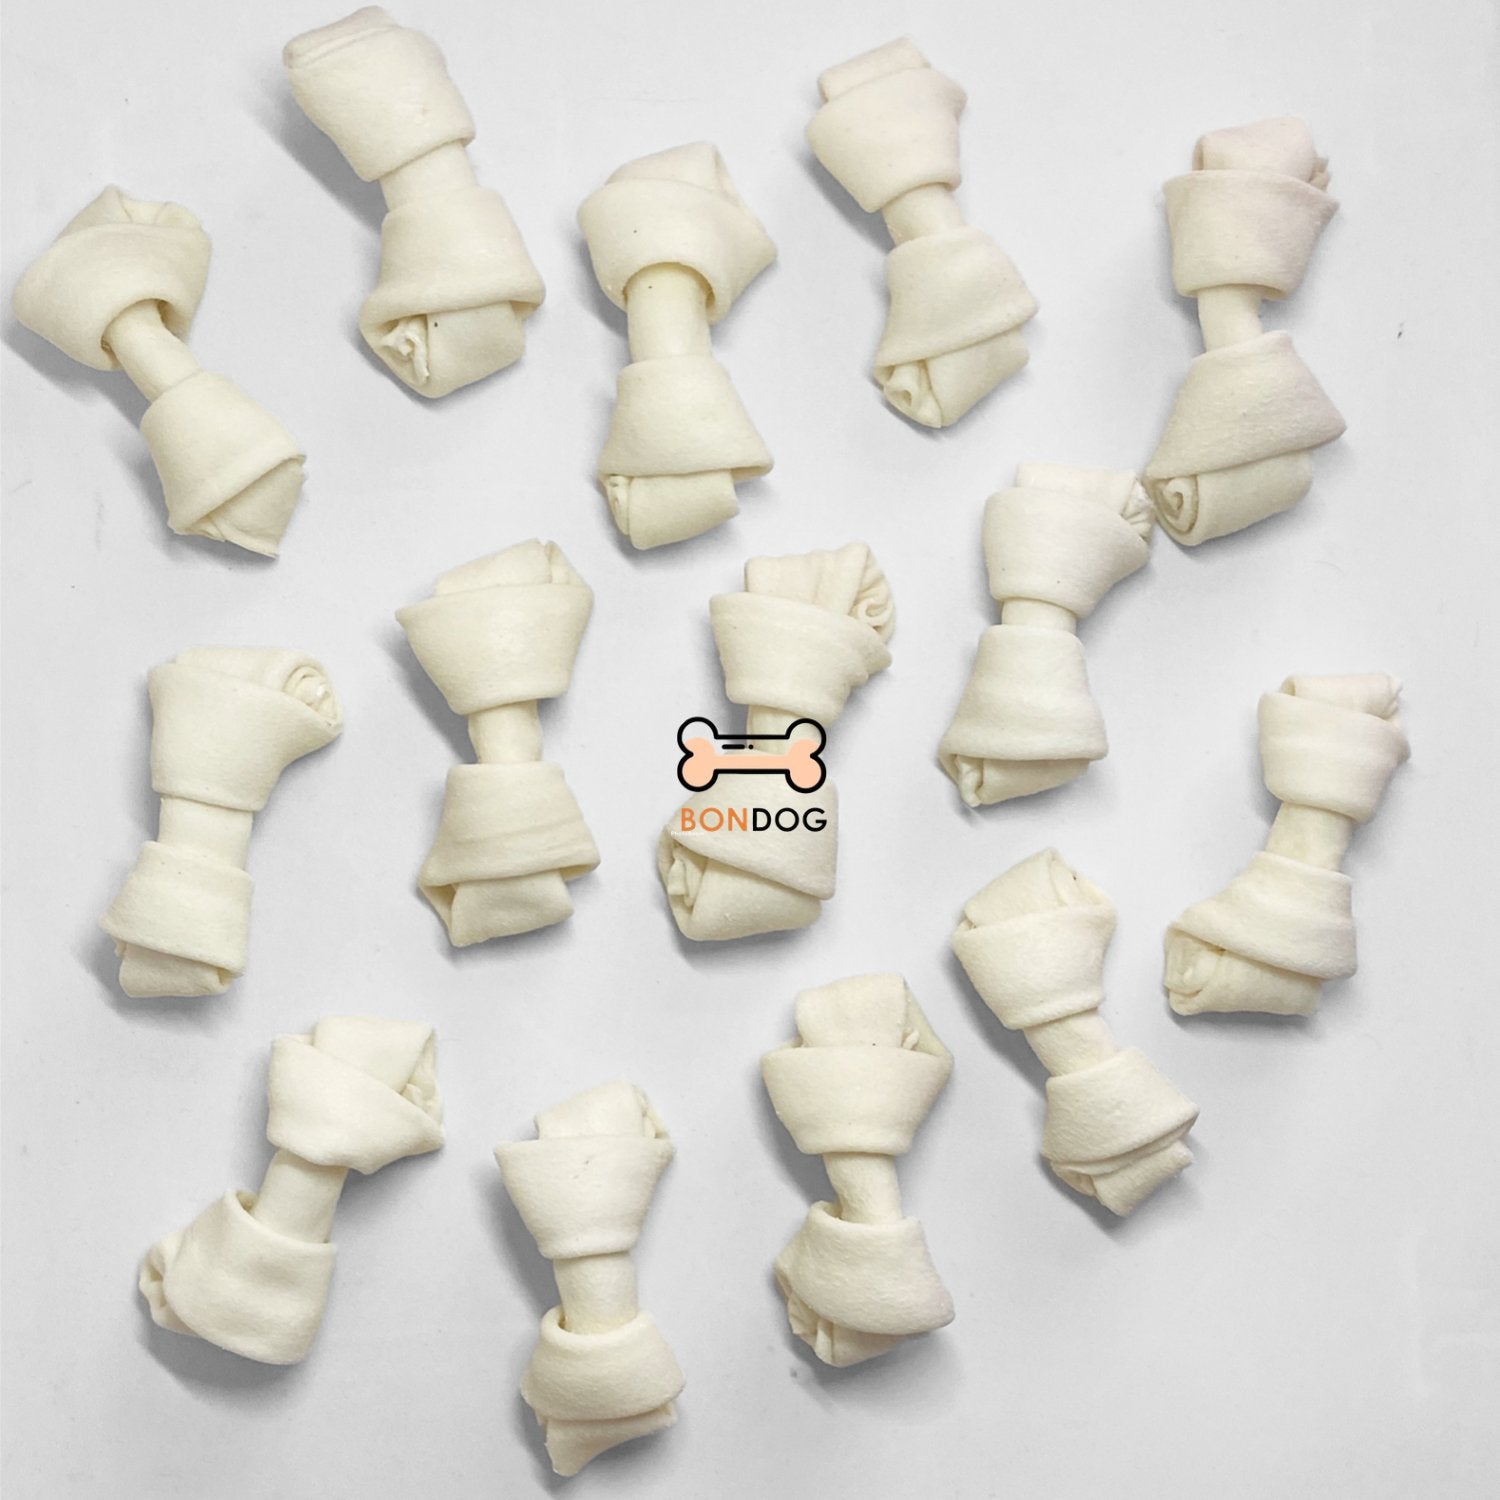 Huesos para razas pequeñas/medianas (9 cm - 25 piezas) - Bondogmx